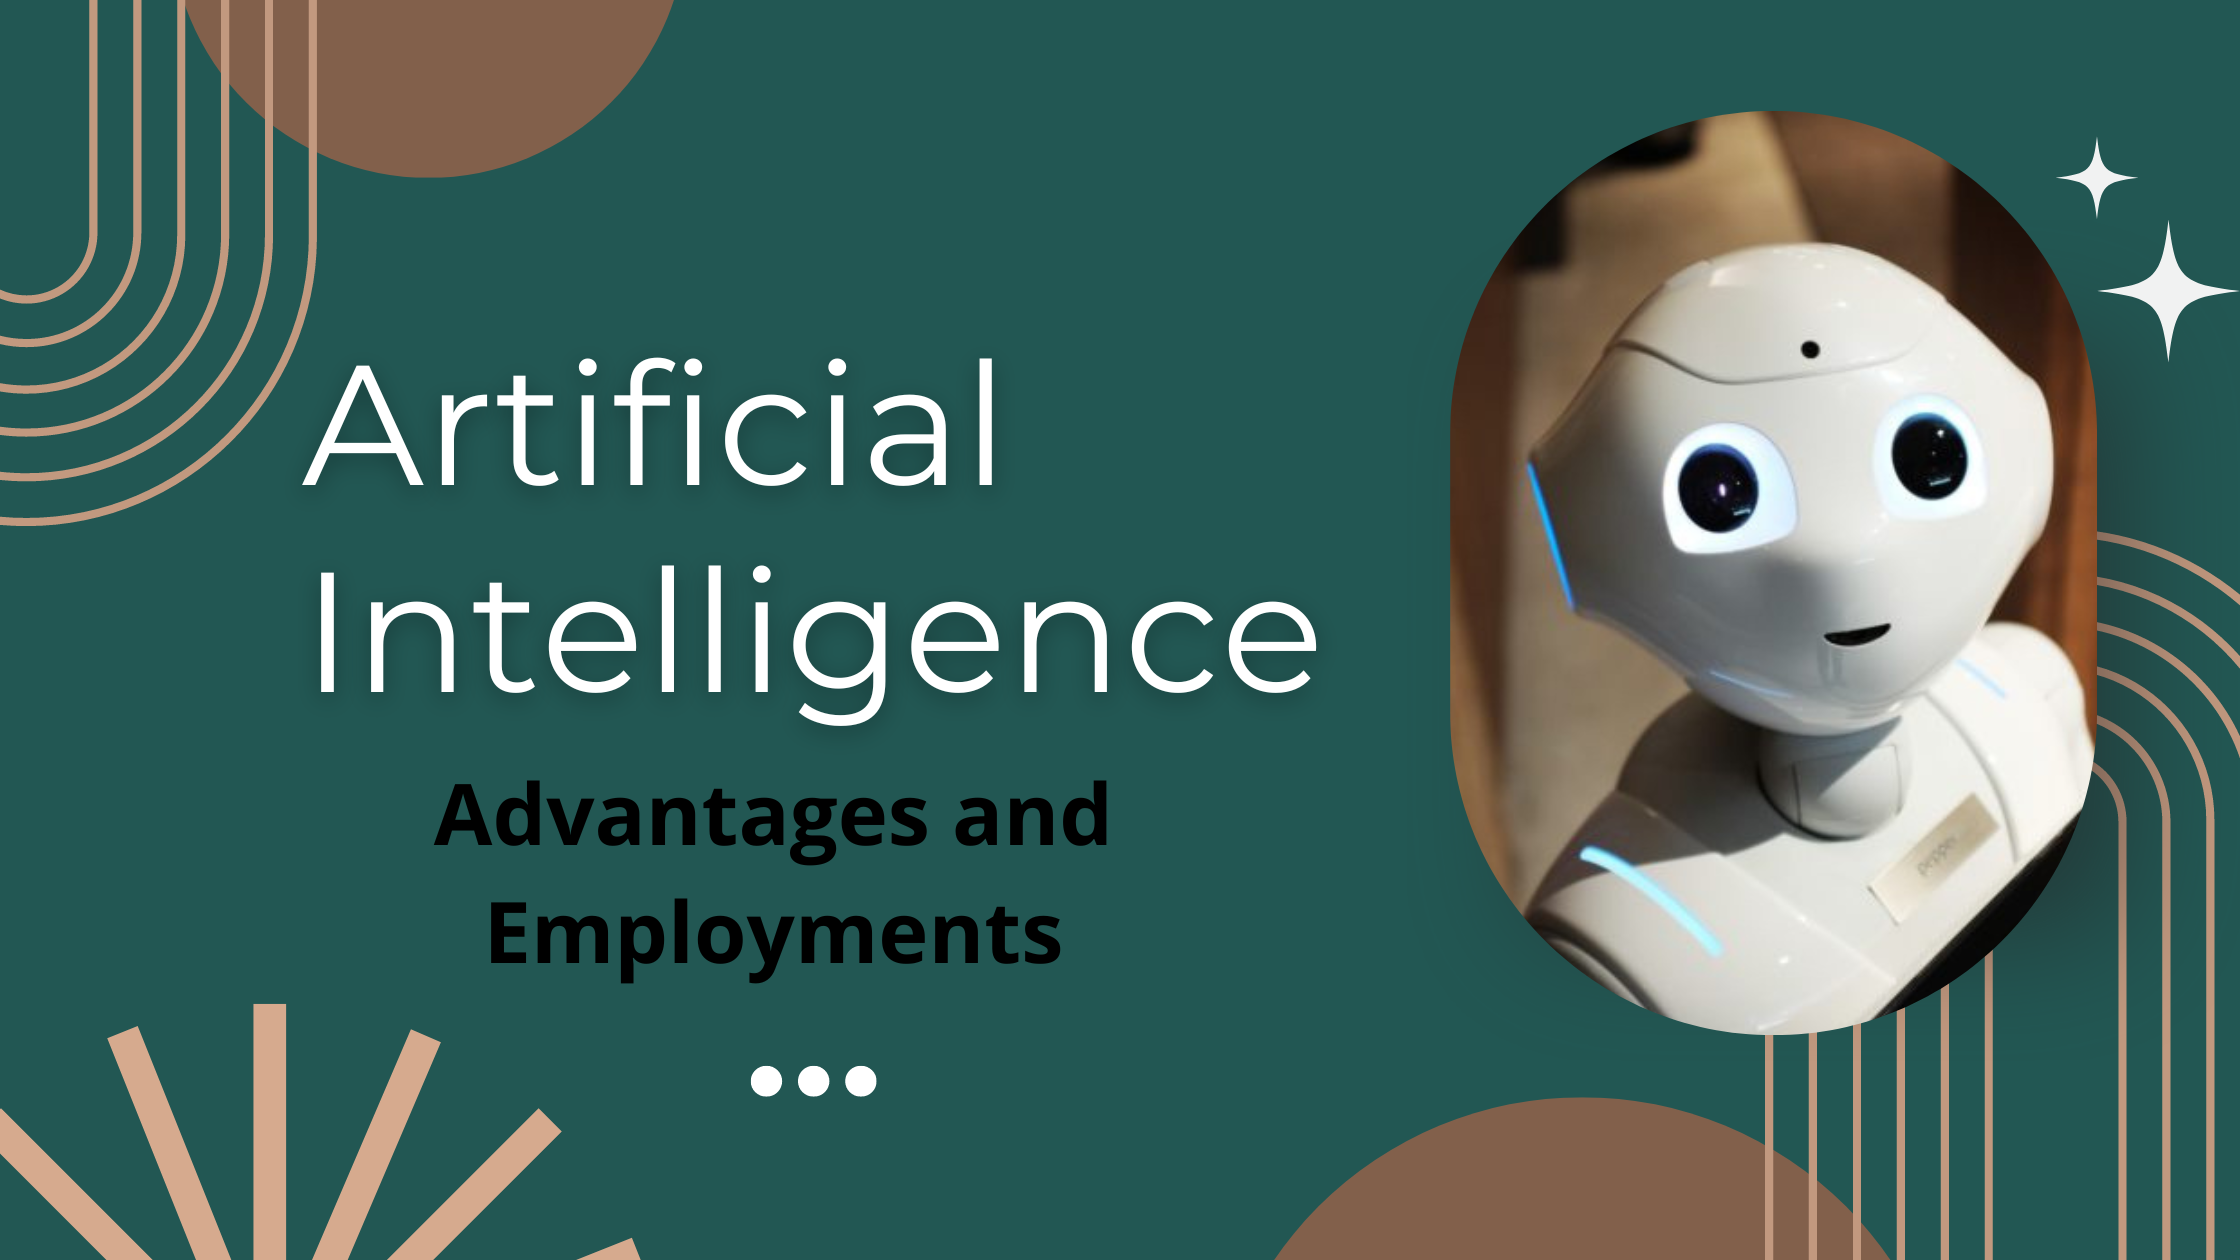 Artificial intelligence's employment